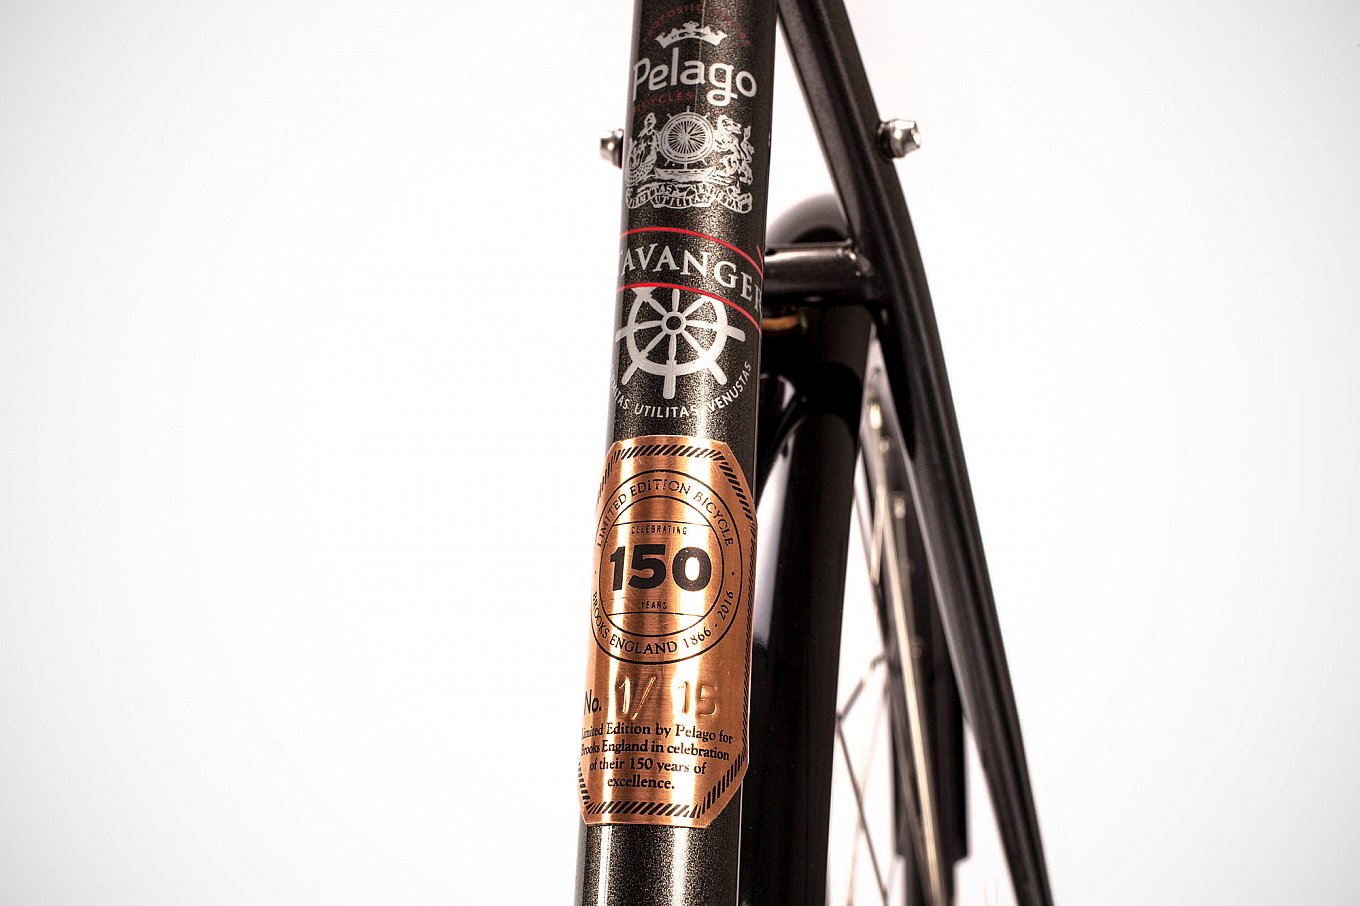 brooks-england-x-pelago-bicycles-limited-edition-stavanger-bike-5